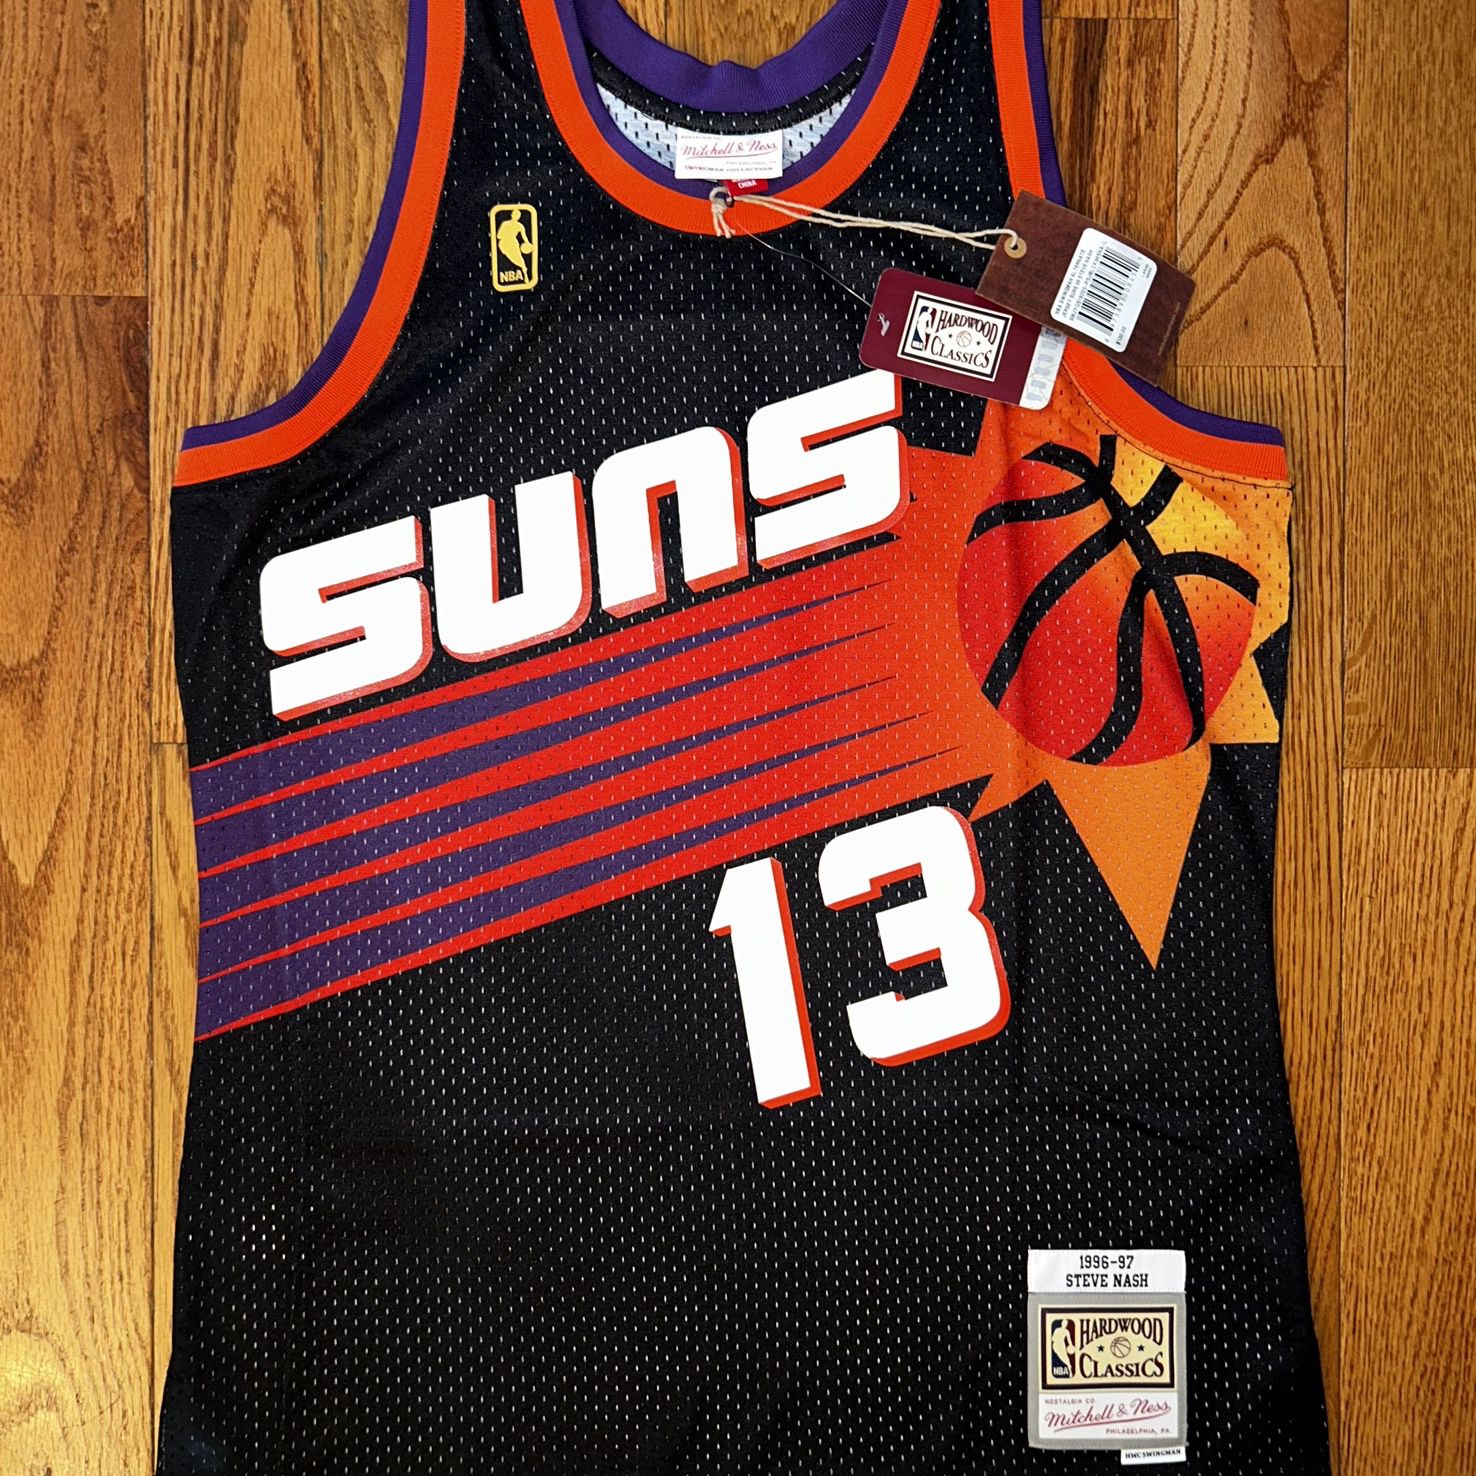 Phoenix Suns 1996-97 Steve Nash #13 Alternate Swingman Jersey (sz. L or XL)  for Sale in Humble, TX - OfferUp